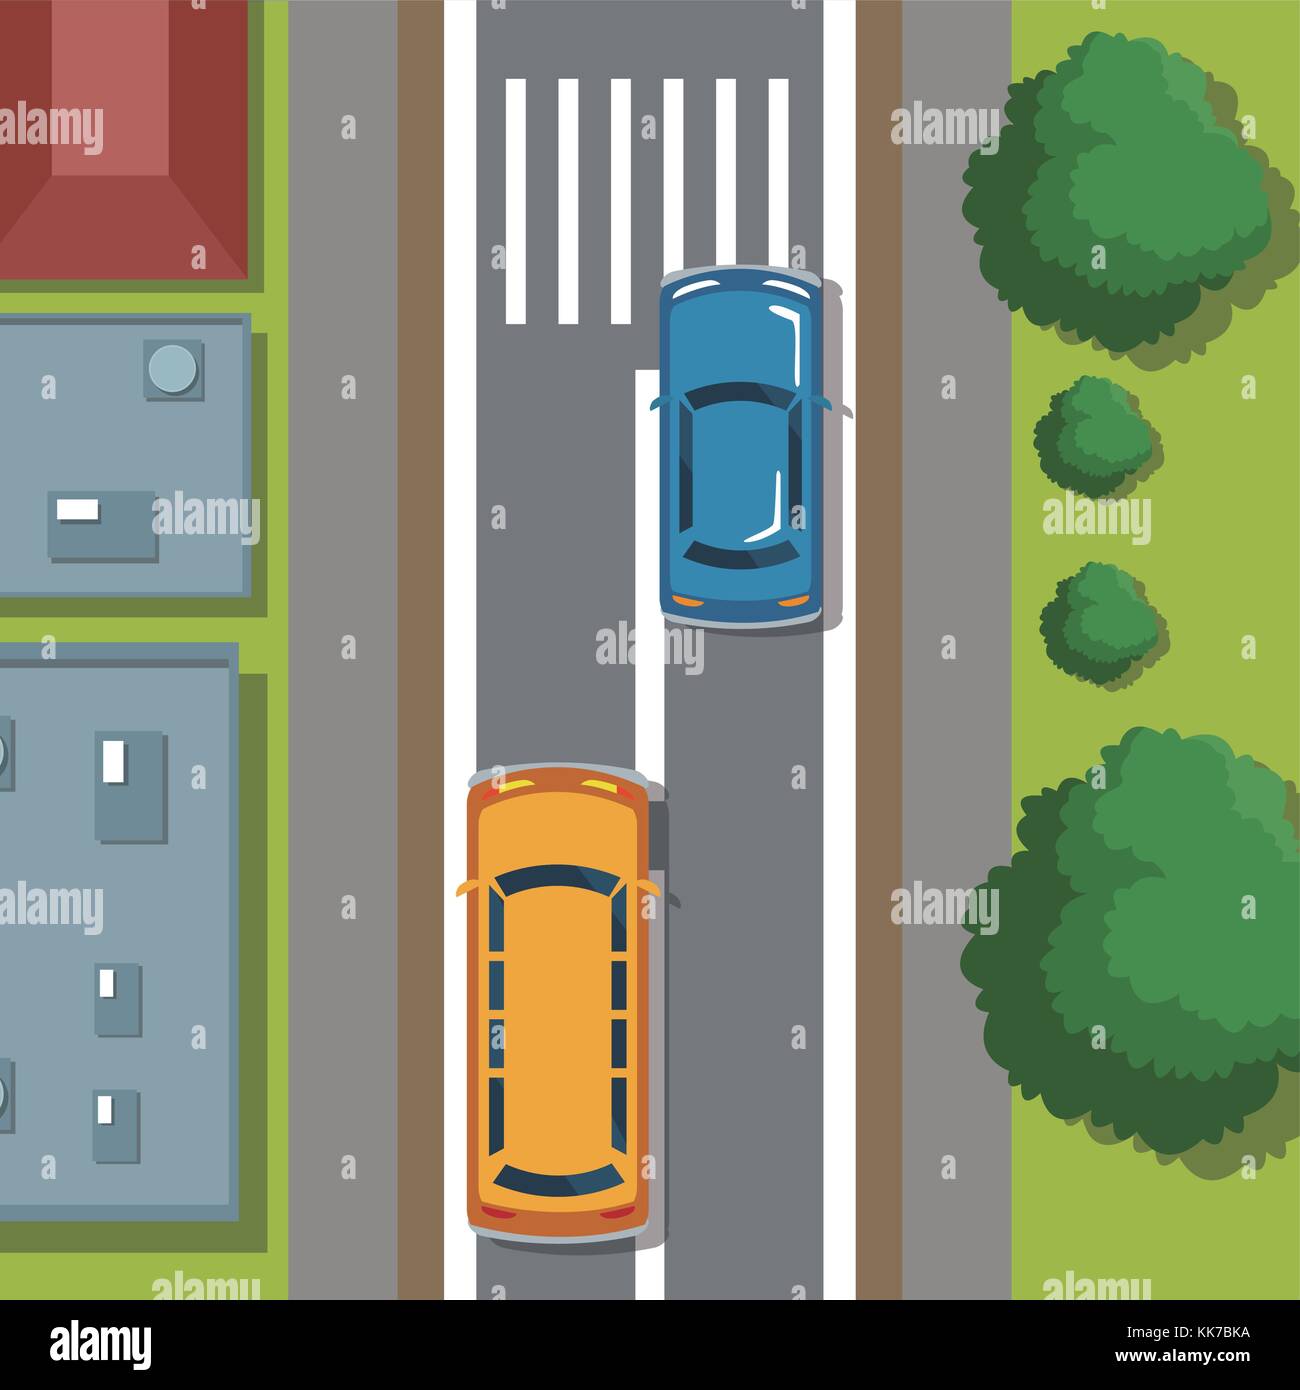 Autobahnen Draufsicht Cartoon Stock Vektorgrafik Alamy